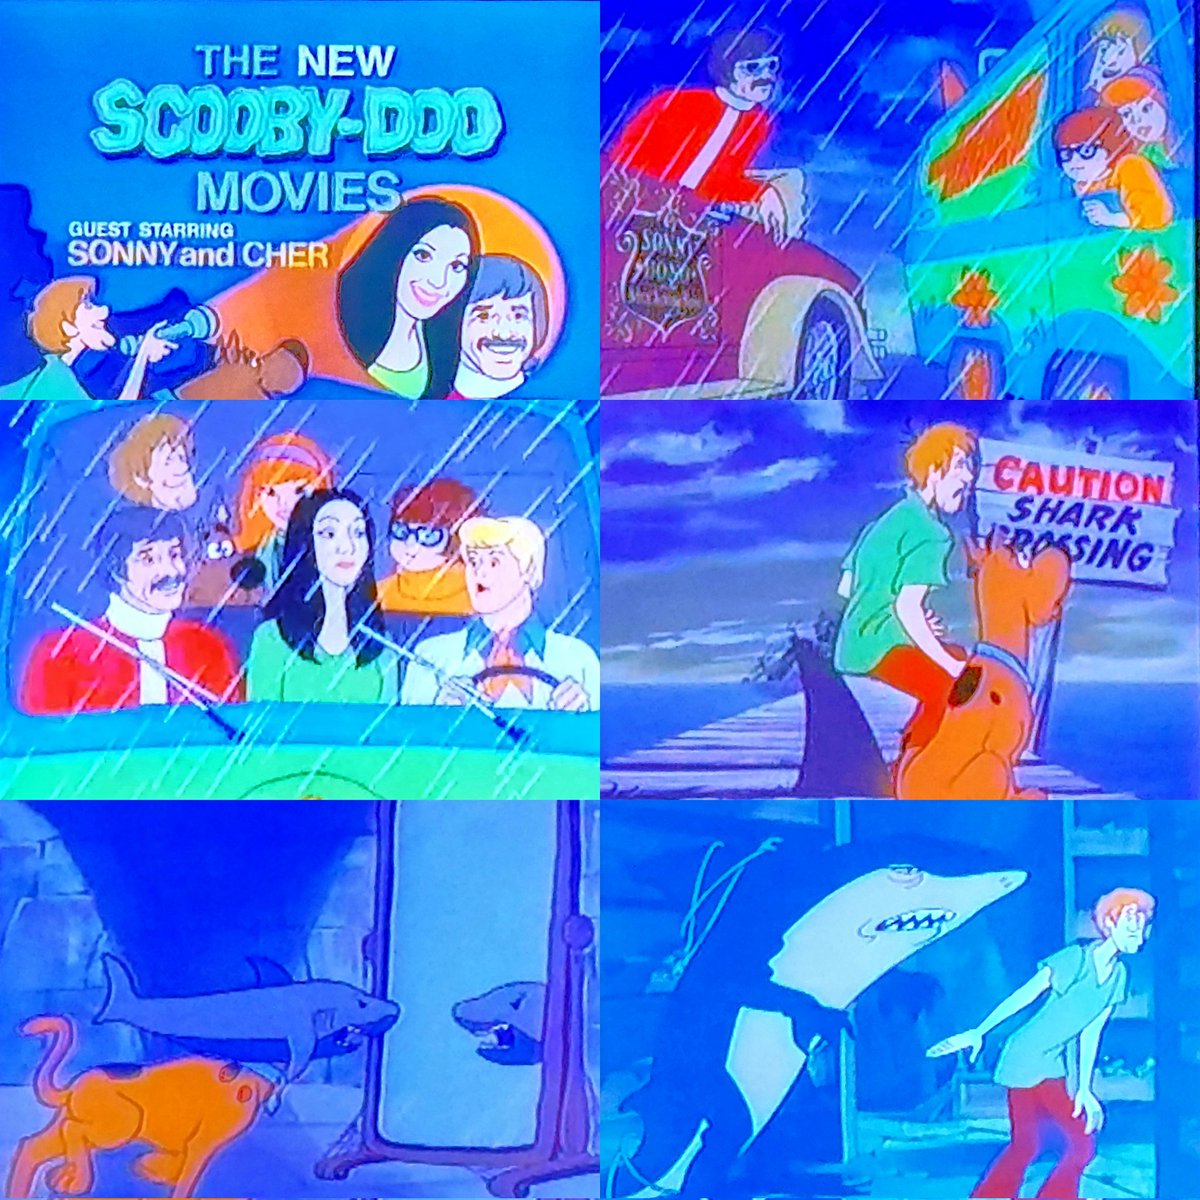 #NowWatching The New Scooby-Doo Movies🔎🐾 S1E08 Oct 28th, 1972🗓📺 'The Secret of Shark Island'🦈🏝 Featuring Sonny & Cher! #ScoobyDoo #ShaggyRogers #VelmaDinkley #DaphneBlake #FredJones #HannaBarbera #SaturdayMorningCartoons #Animation #TVSeries #Retro #Nostalgia